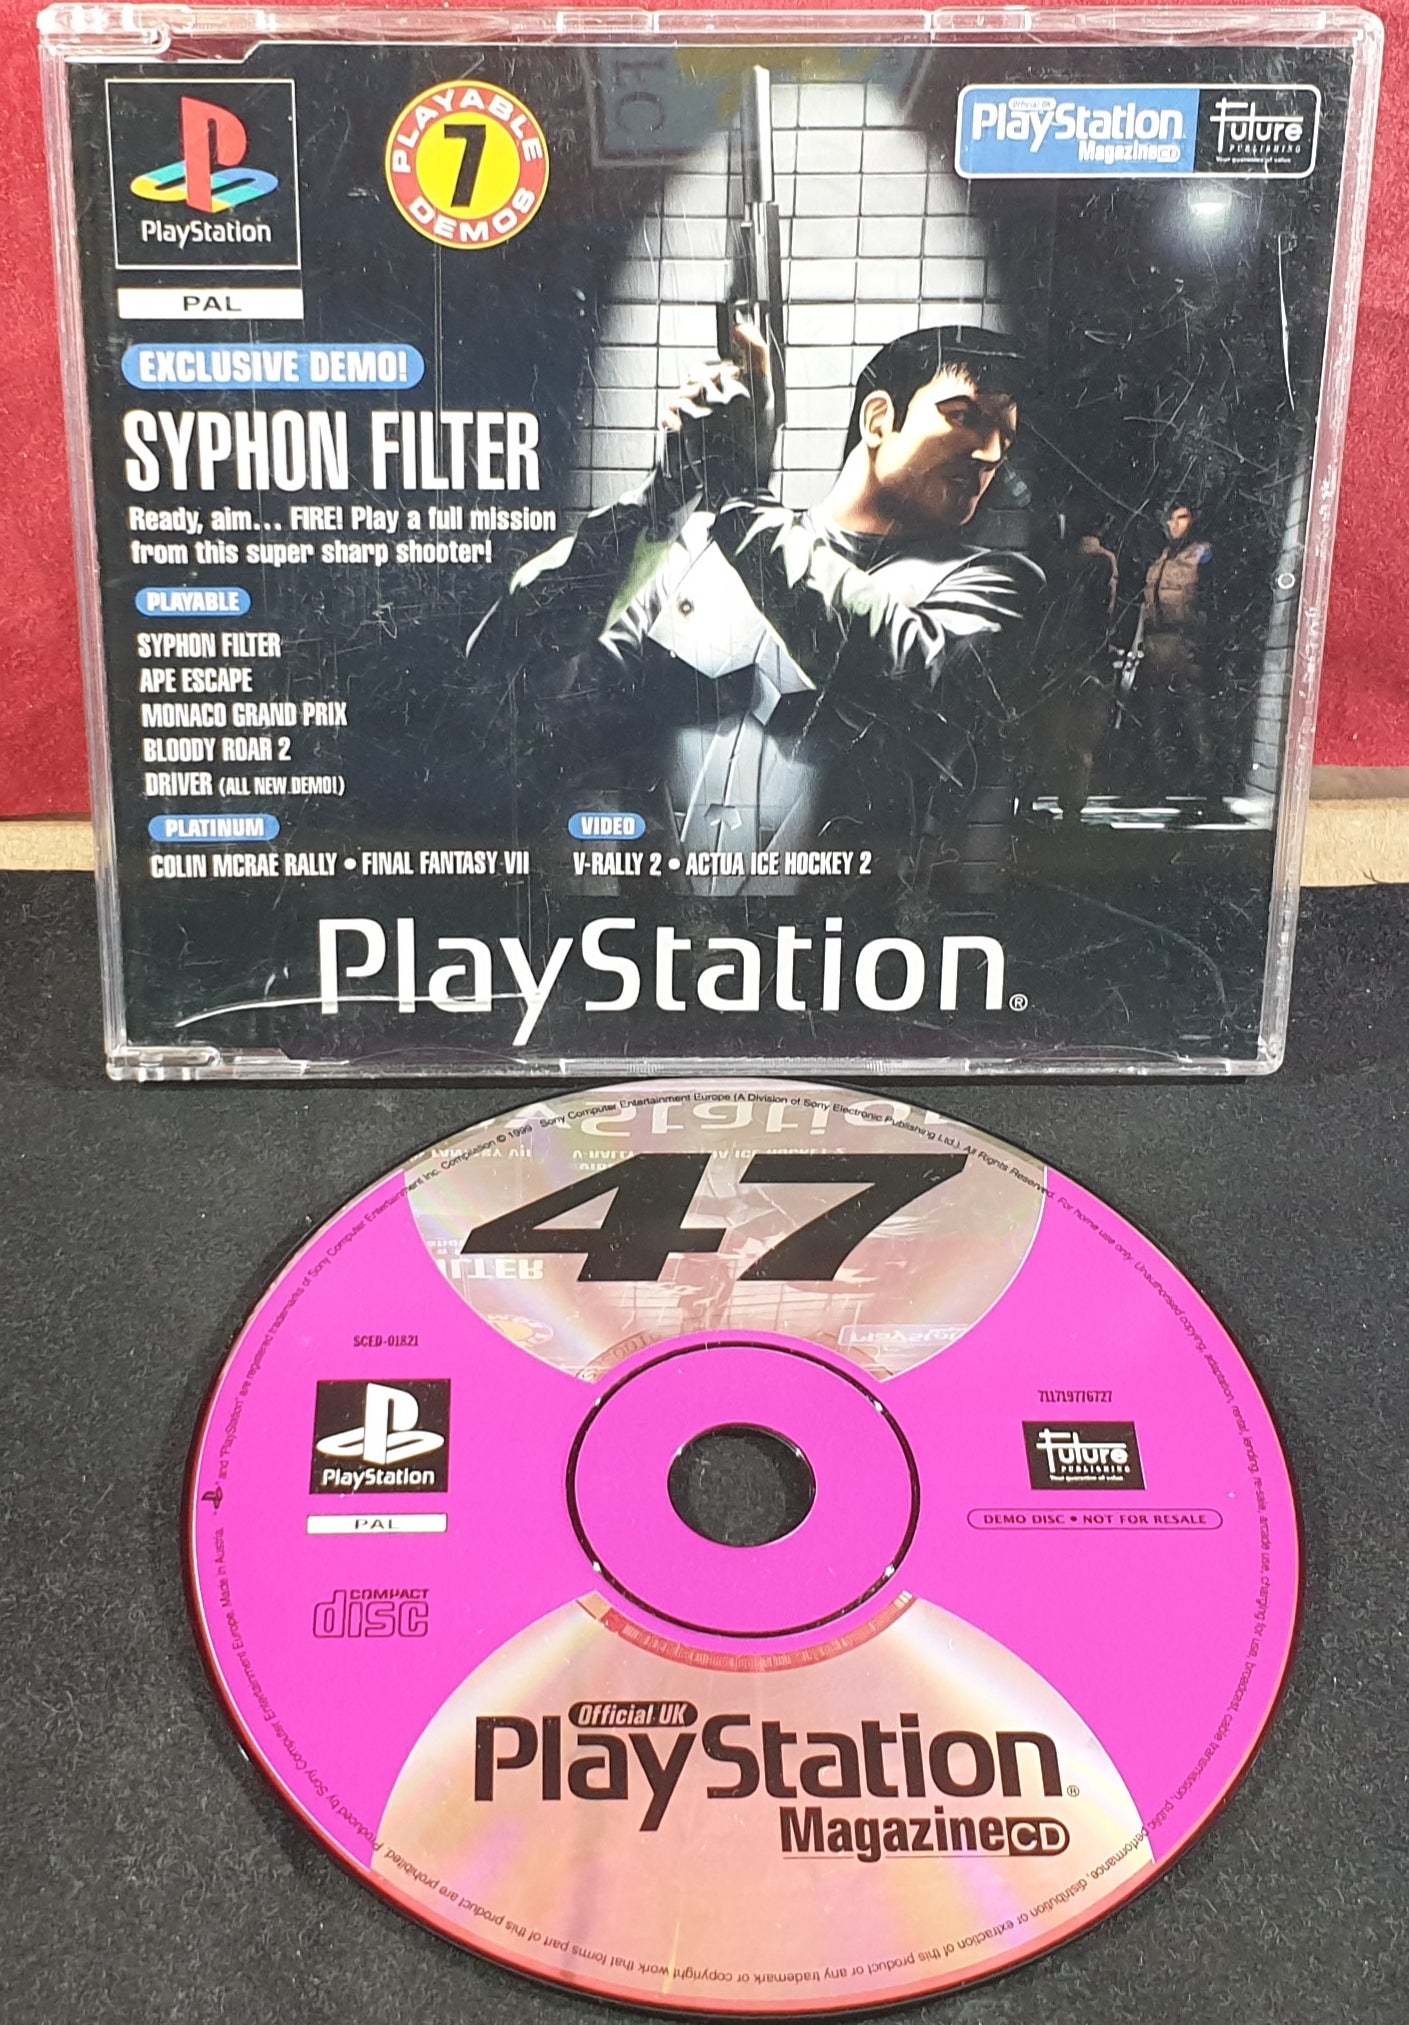 Sony Playstation 1 (PS1) Magazine Demo Disc 47